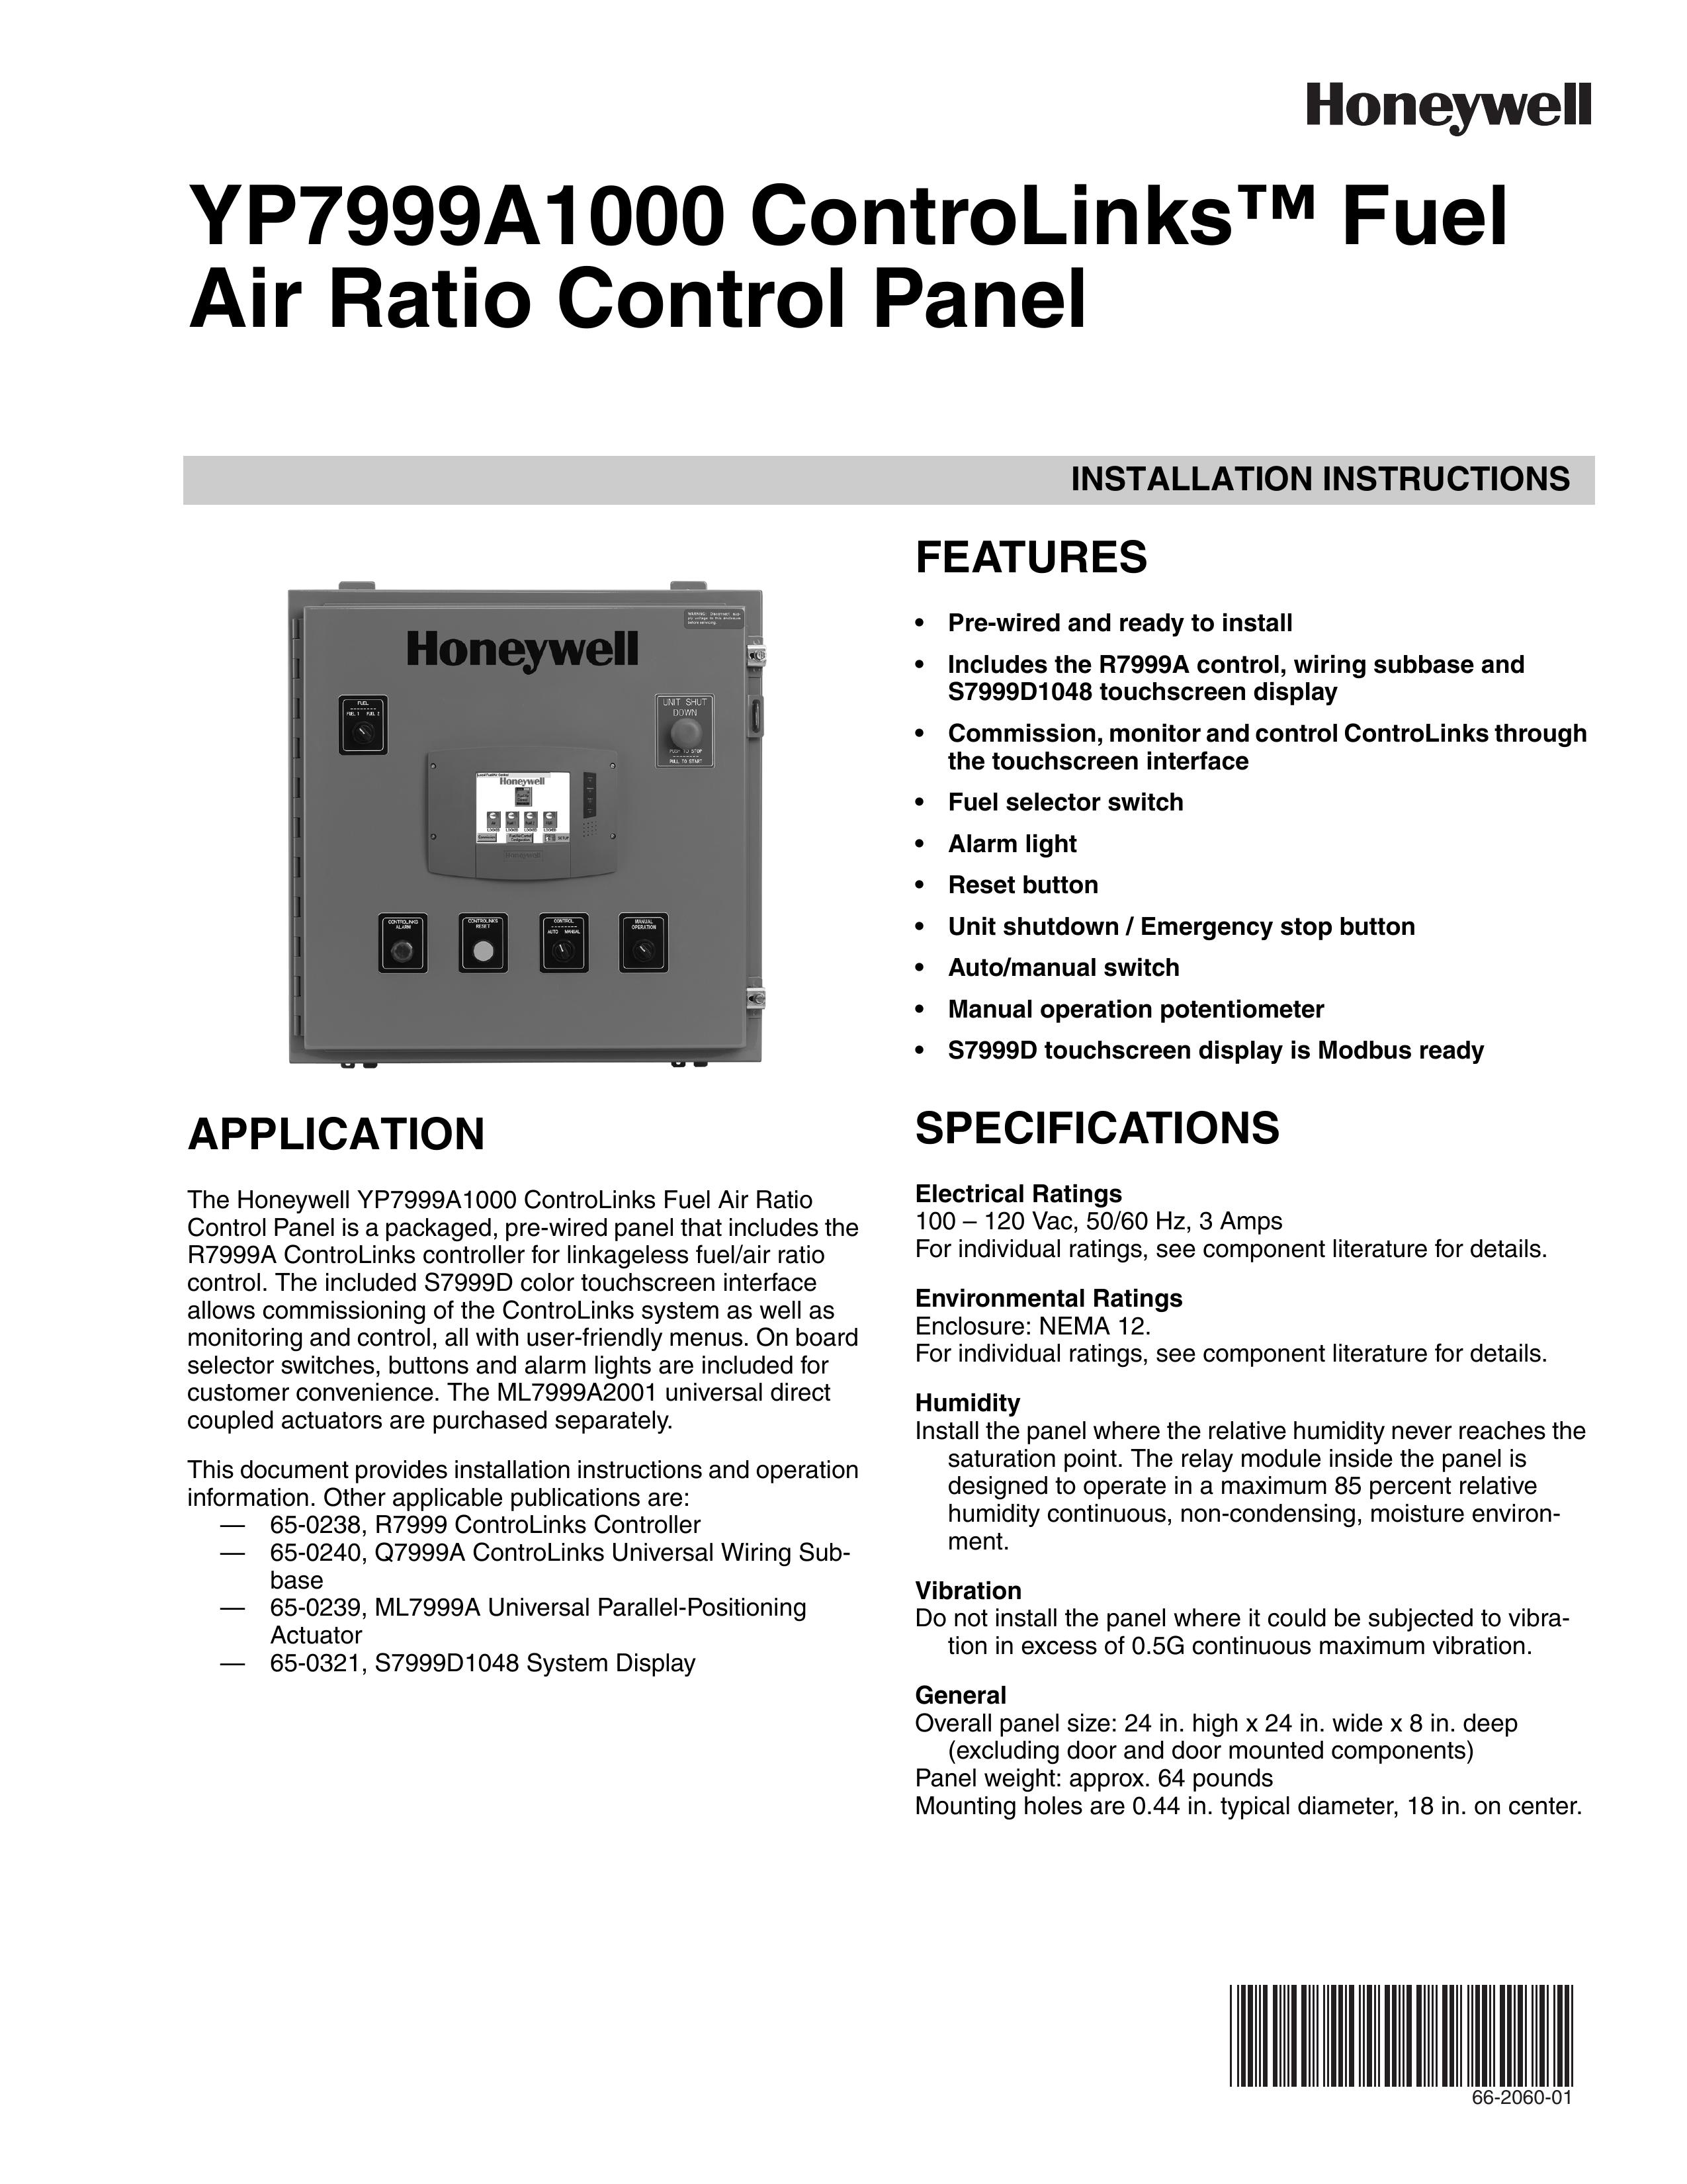 Honeywell YP7999A1000 Marine Instruments User Manual